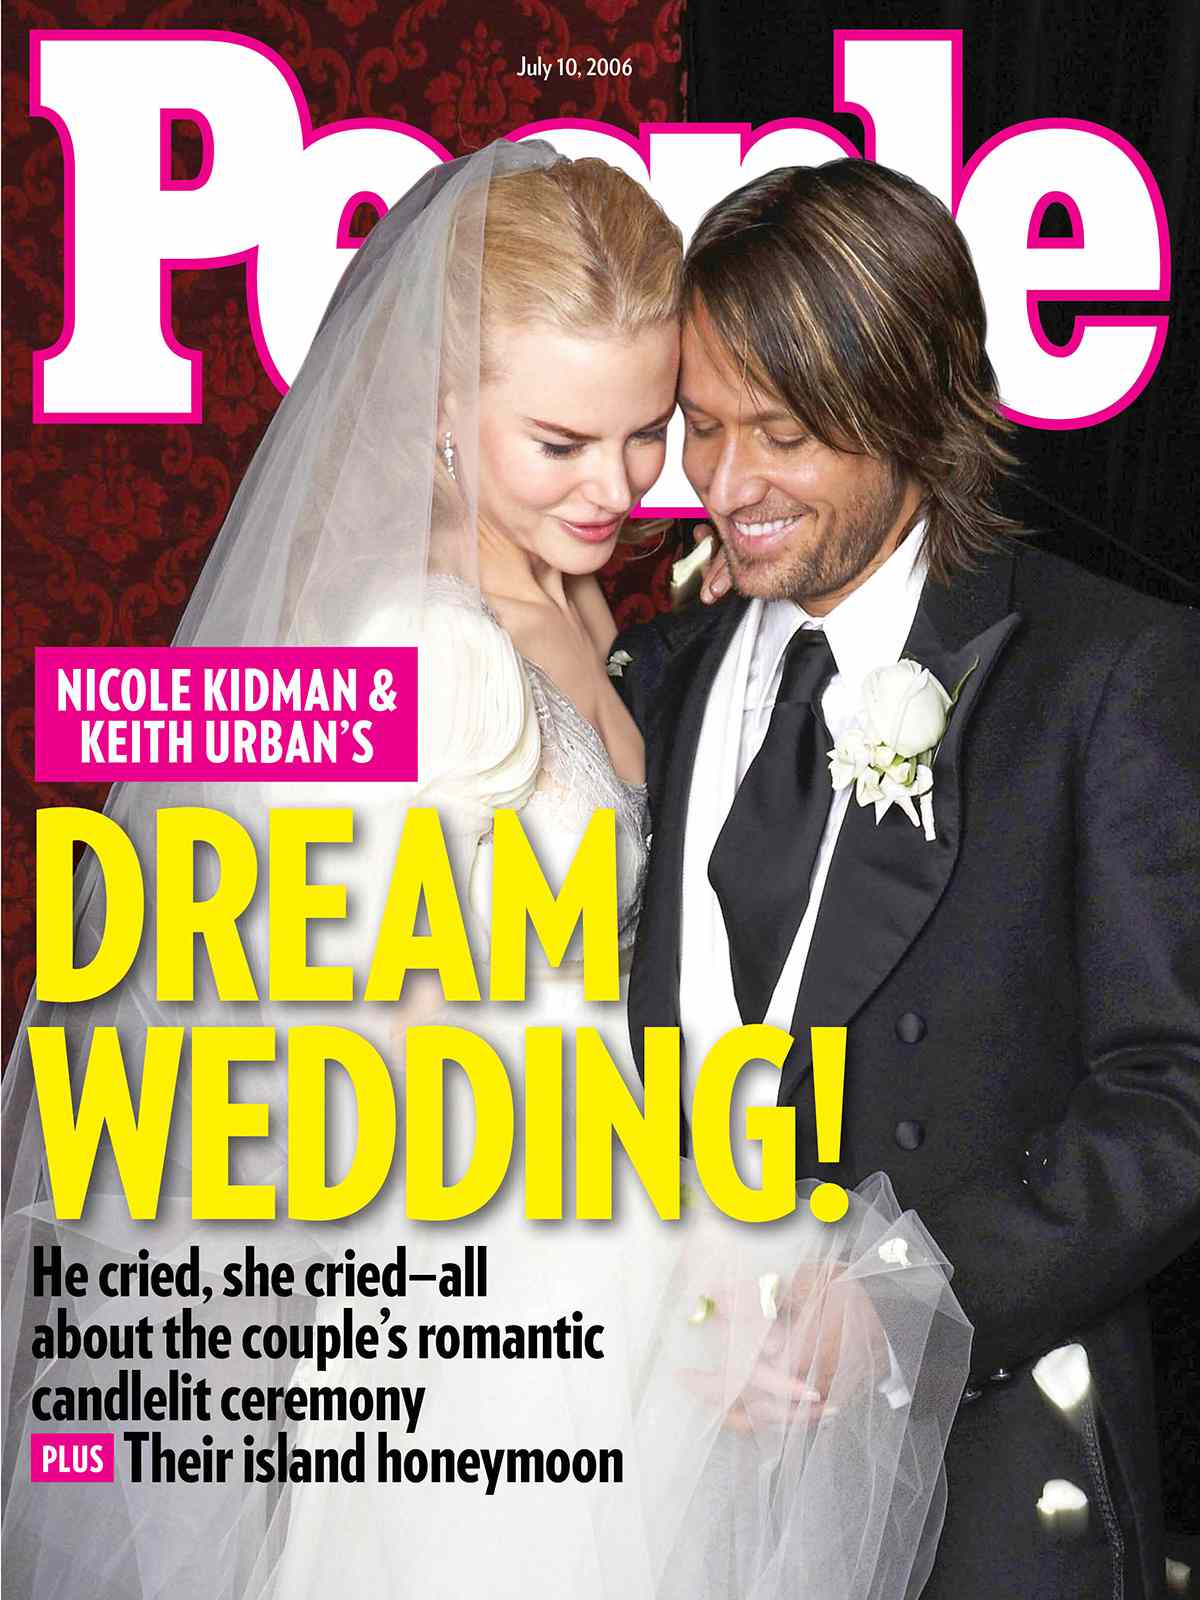 Nicole Kidman and Keith Urban promo wedding cover 7/10/2006